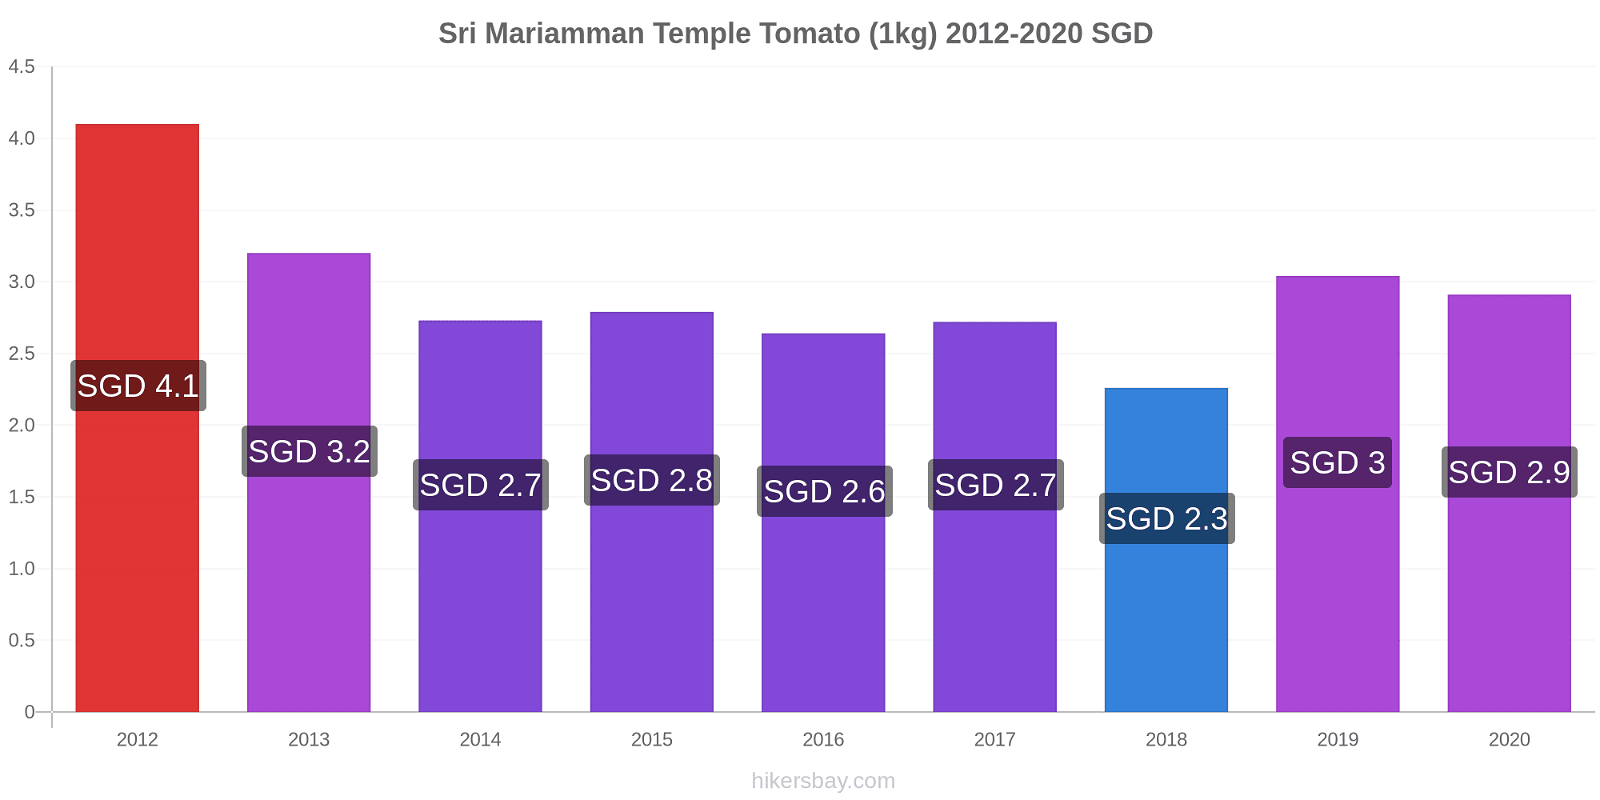 Sri Mariamman Temple price changes Tomato (1kg) hikersbay.com